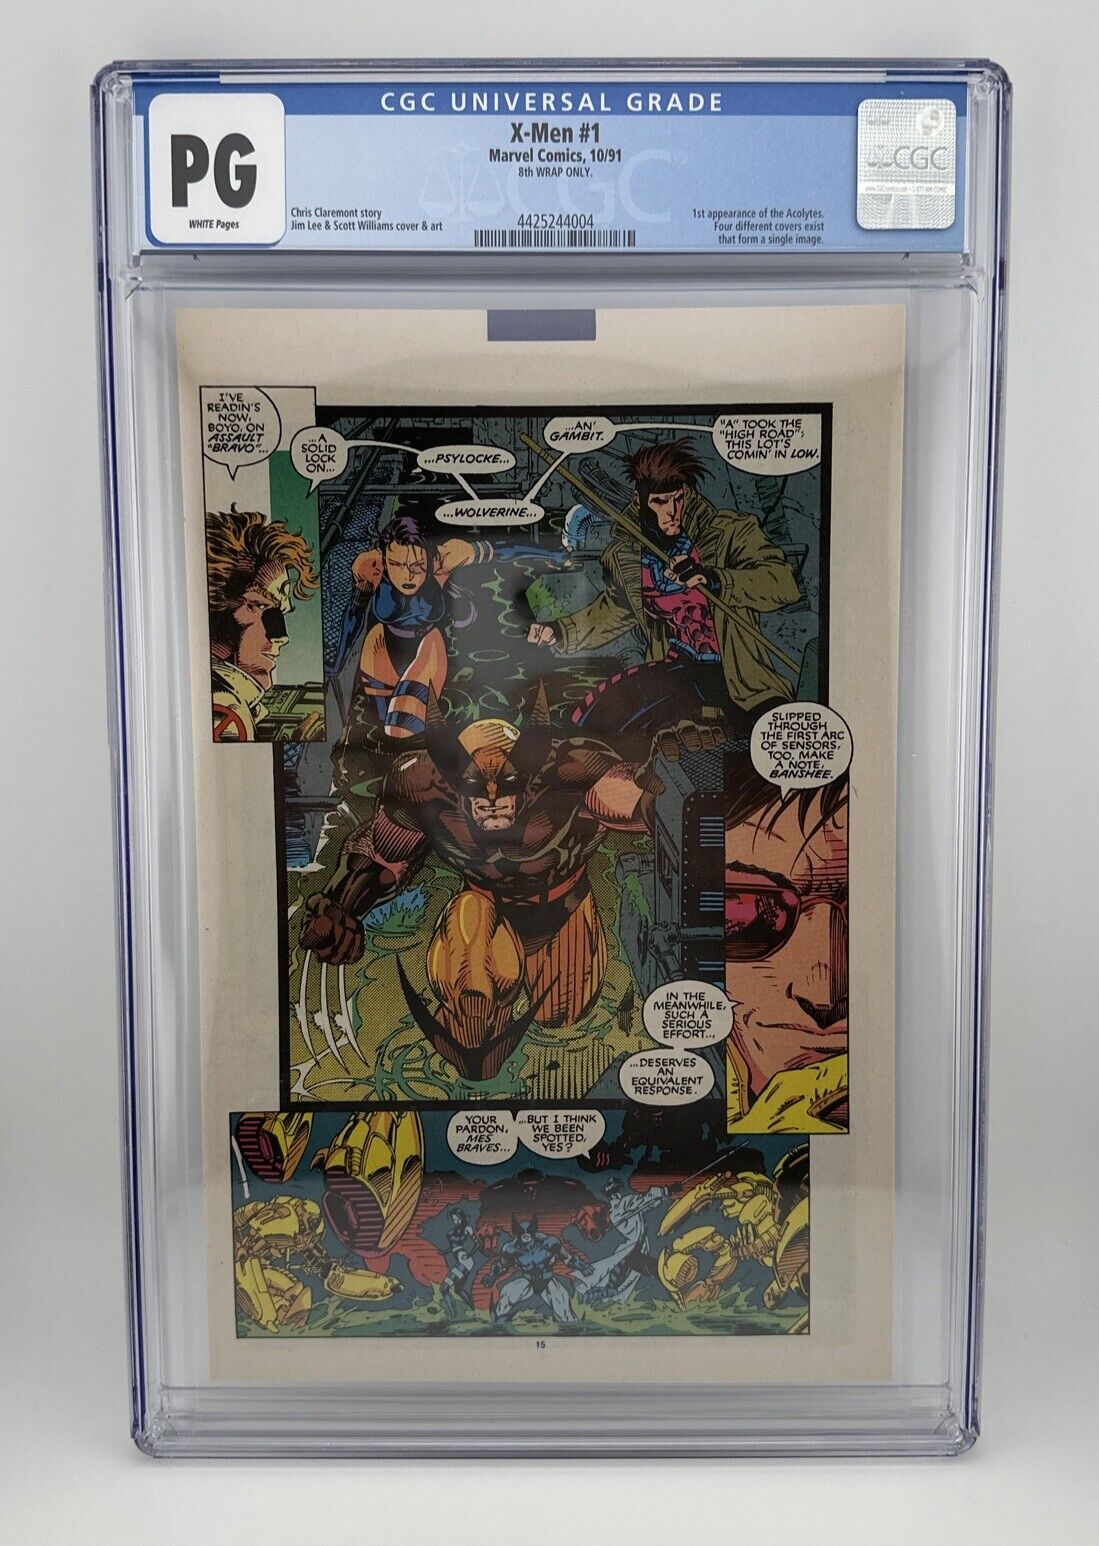 Marvel X-Men #1 (1991) 8th Wrap Comic Graded CGC PG